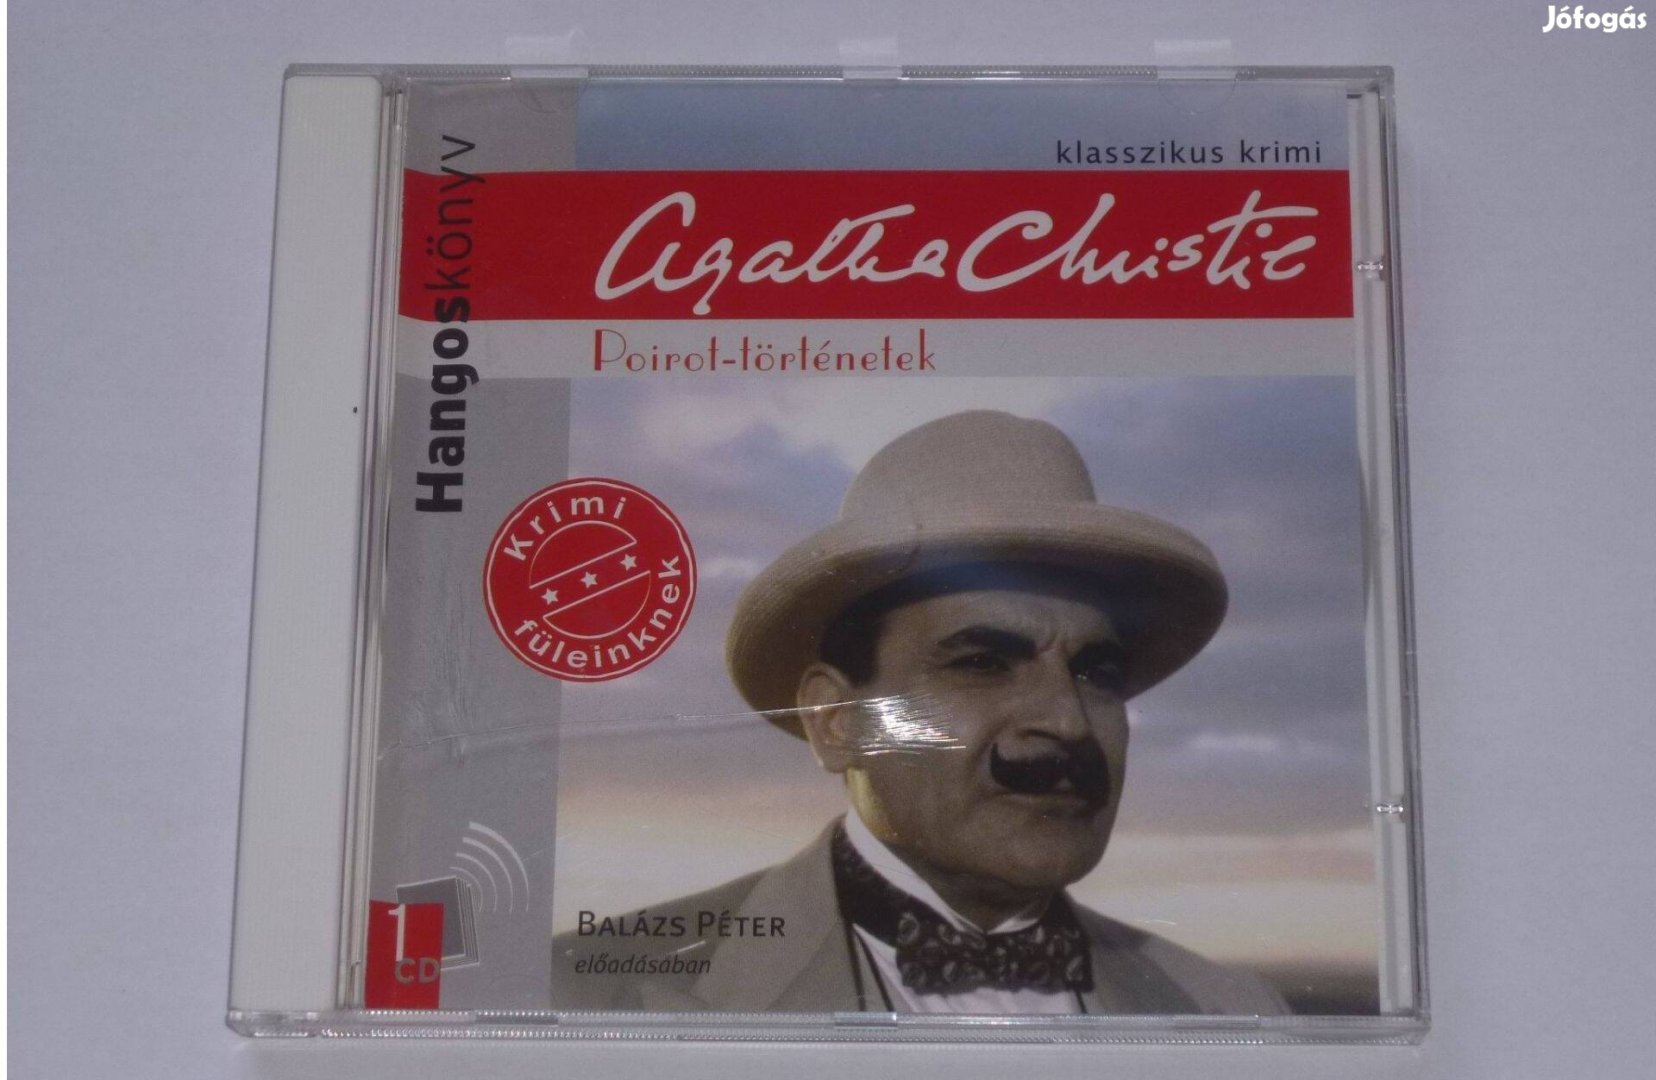 Agatha Christie - Poirot- történetek hangoskönyv MP3CD